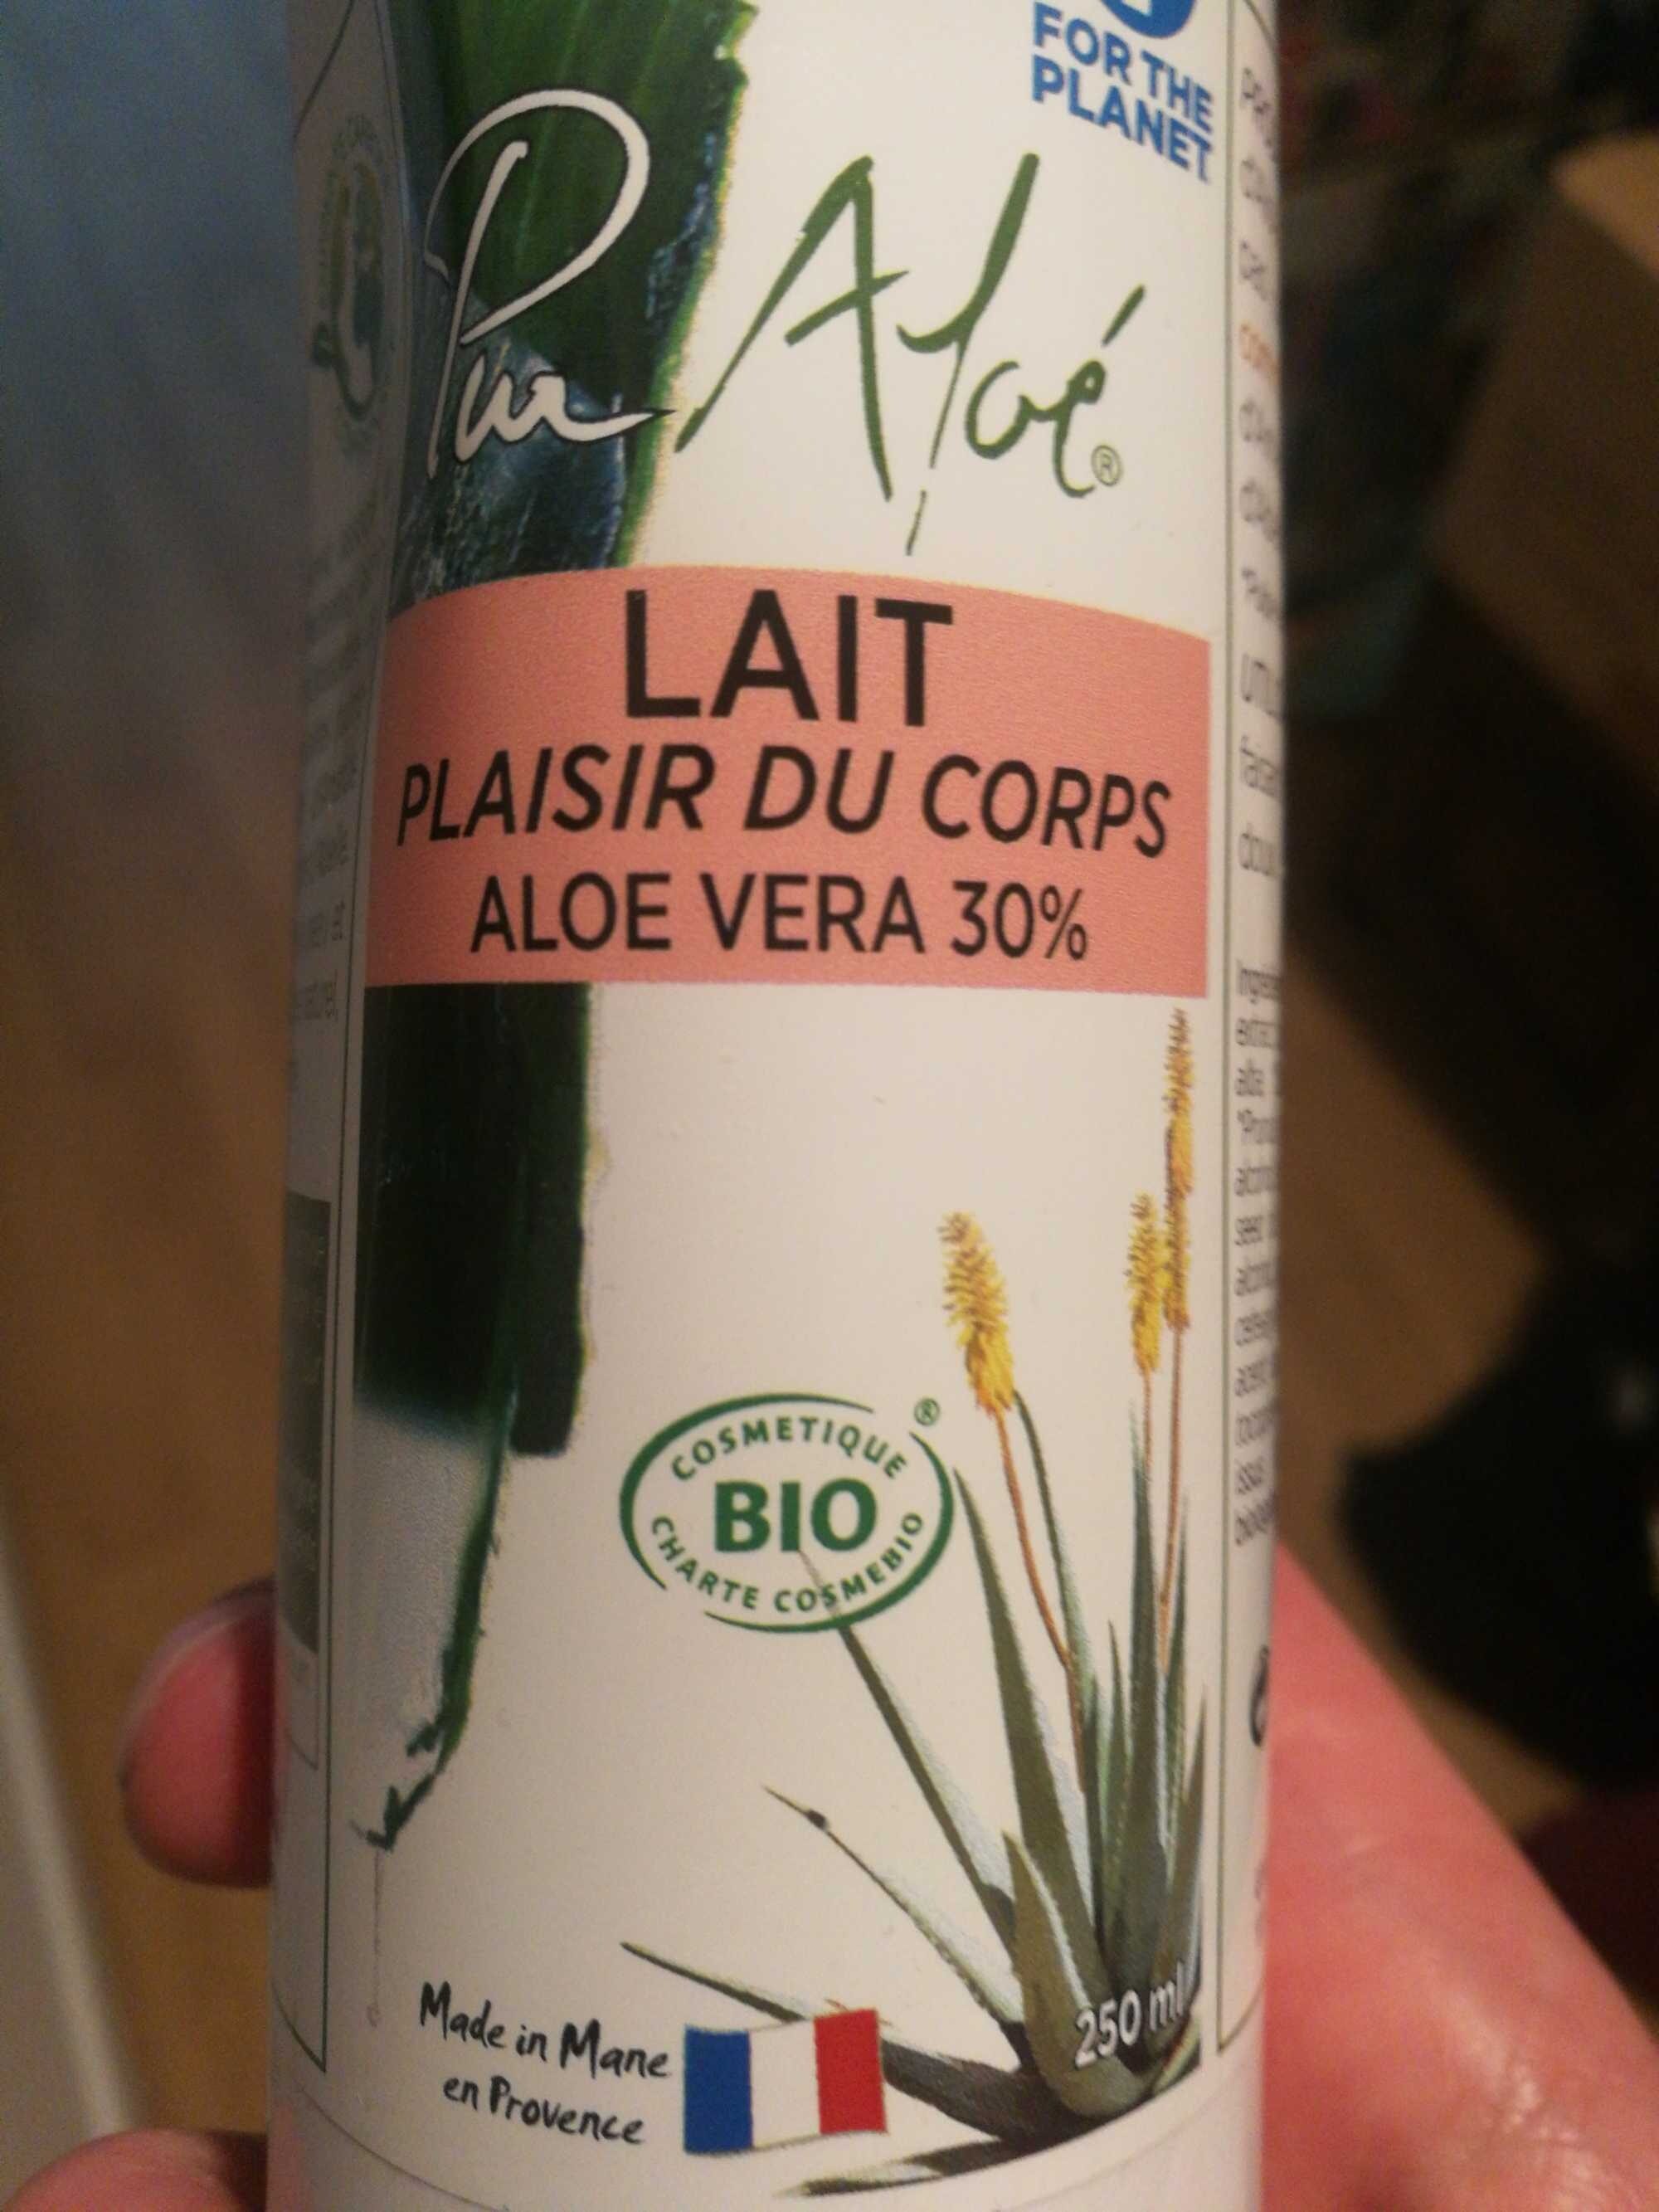 Lait plaisir du corps Aloe Vera 30% - 製品 - fr